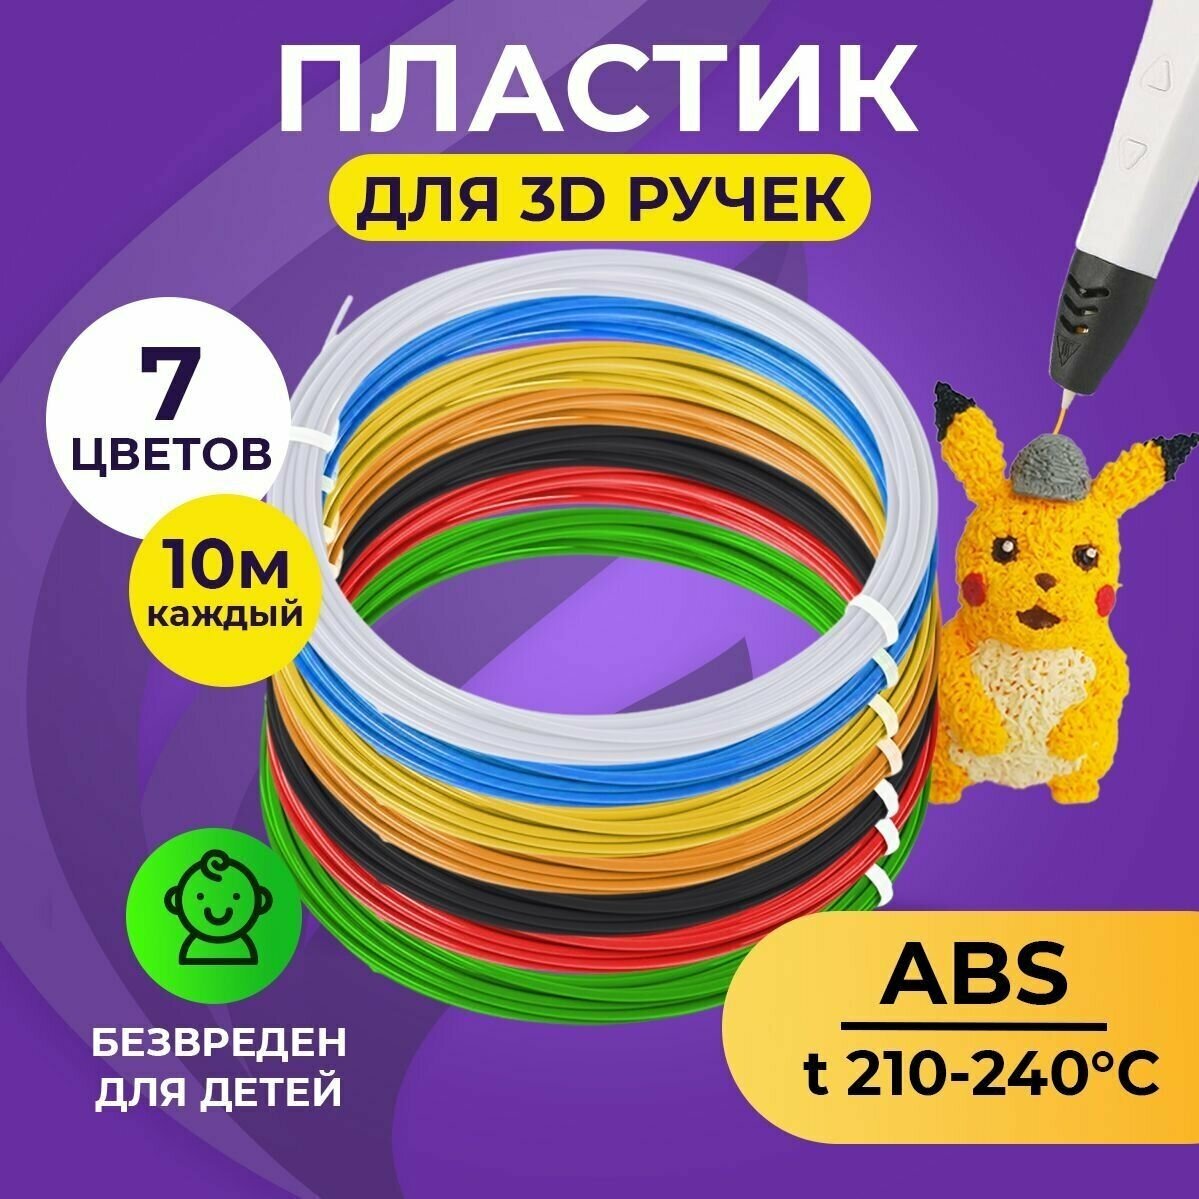 Набор ABS-пластика для 3D ручек (7 цветов по 10 метров) Funtasy / картриджи для 3д ручки , стержни для 3д ручки абс